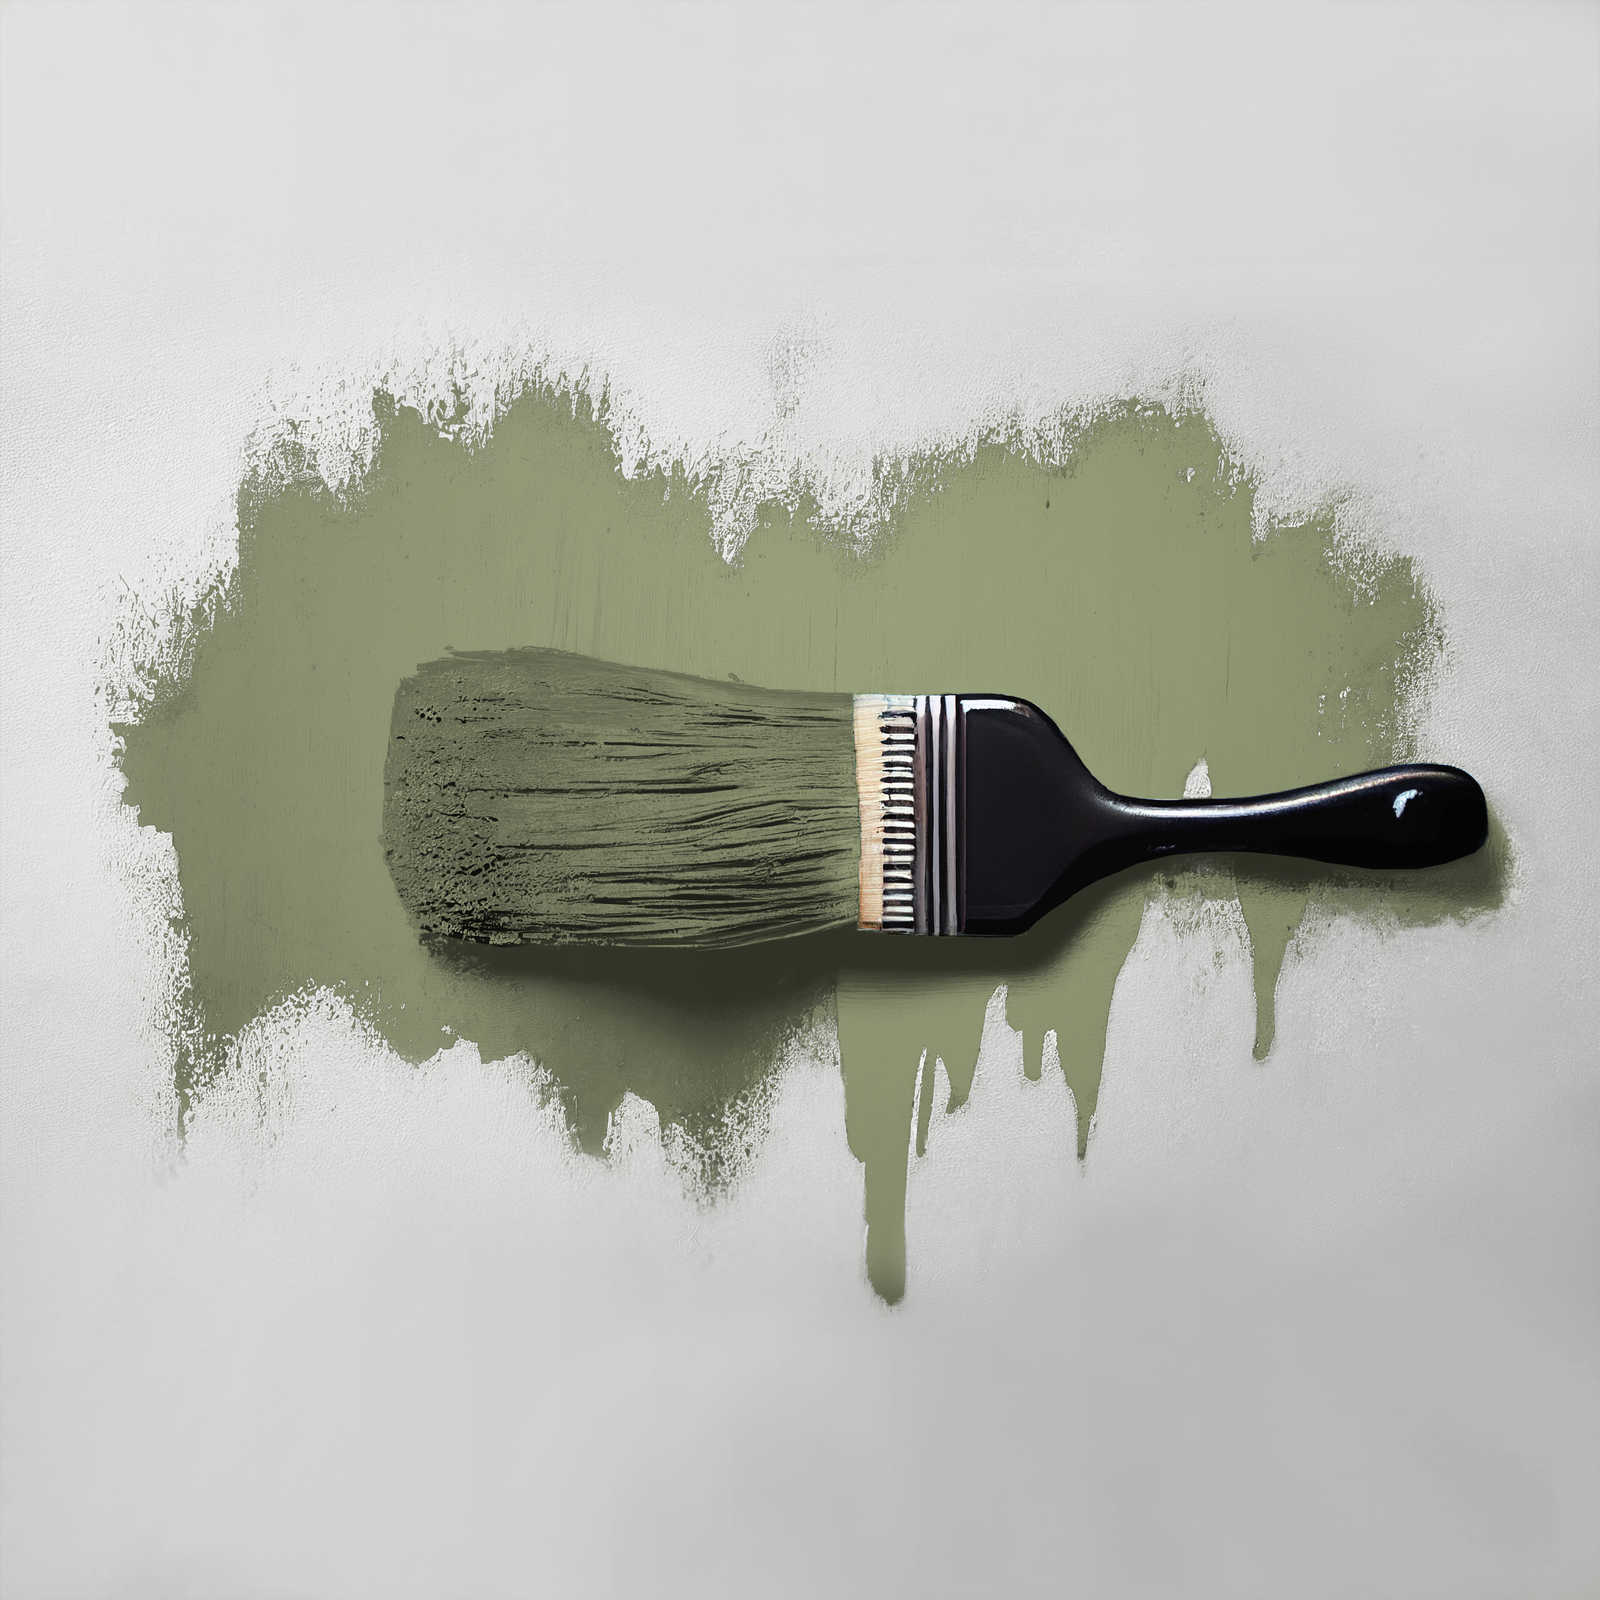             Peinture murale TCK4002 »Balmy Basil« en vert confortable – 2,5 litres
        